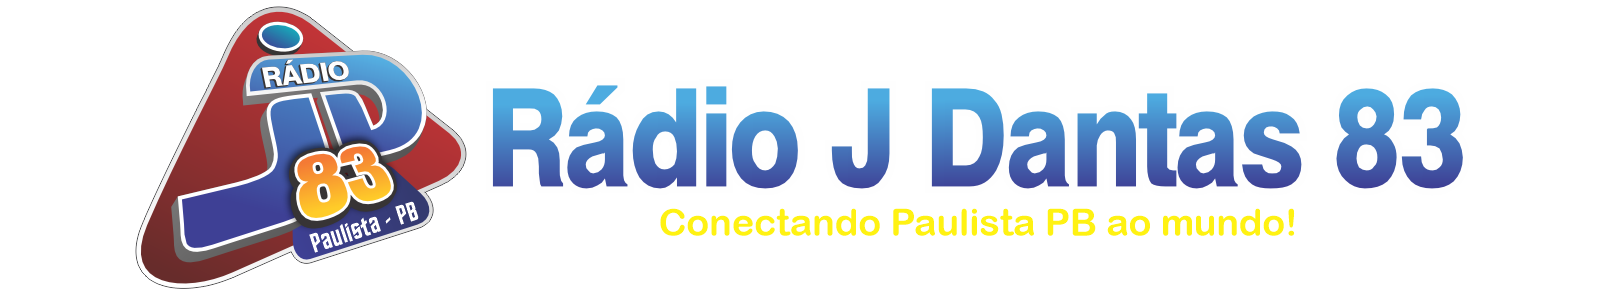 Rádio J Dandas 83